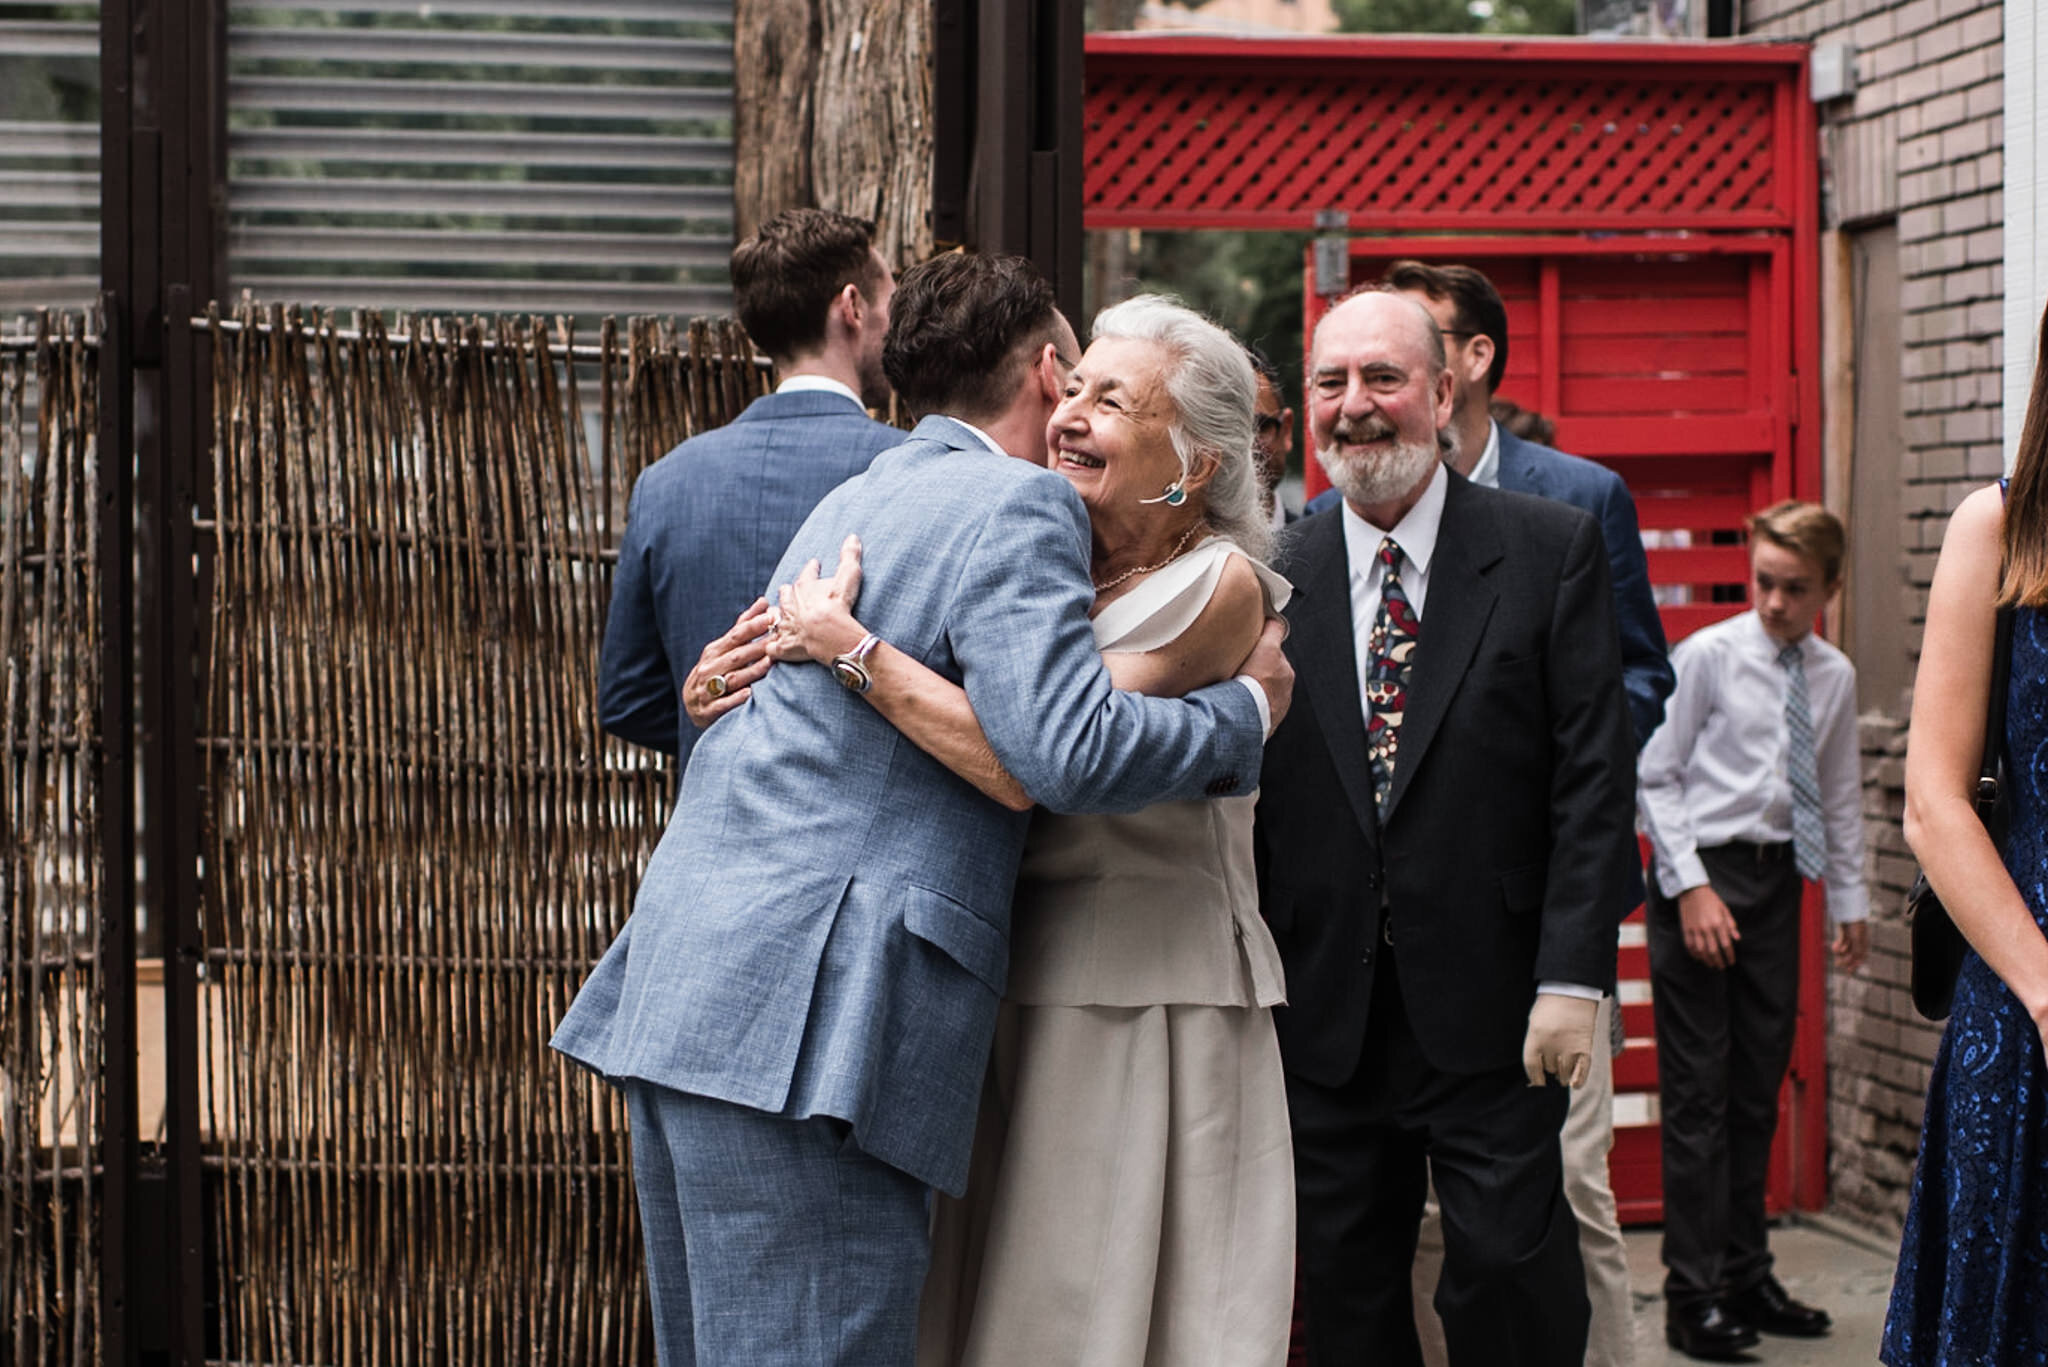 829-emotional-groom-parents-wedding-ceremony-summer-berkeley-fieldhouse-tent-events-photos.jpg